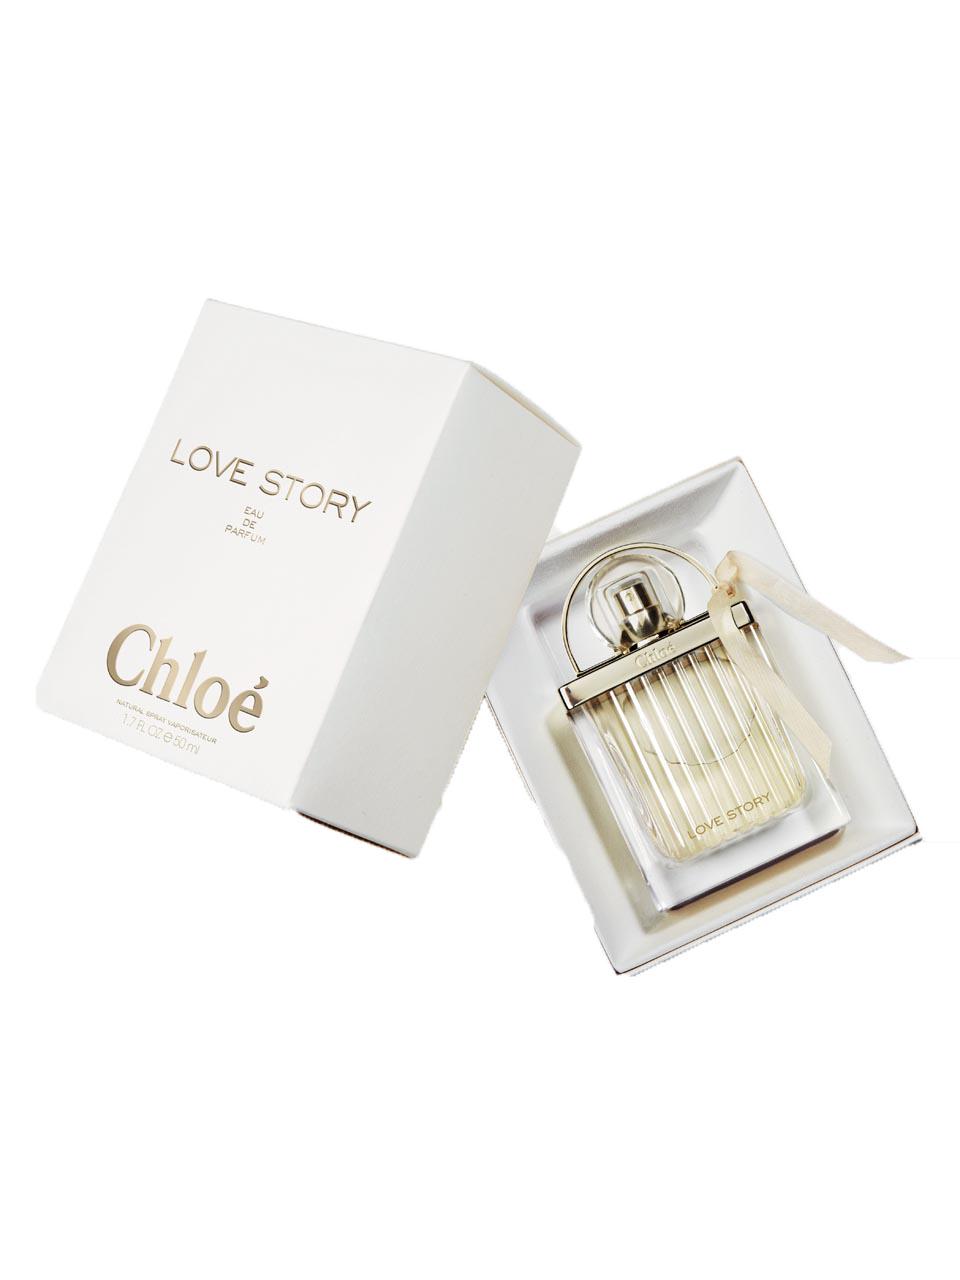 Chloé Love Story Eau de Parfum 50 ml | Frankfurt Airport Online Shopping